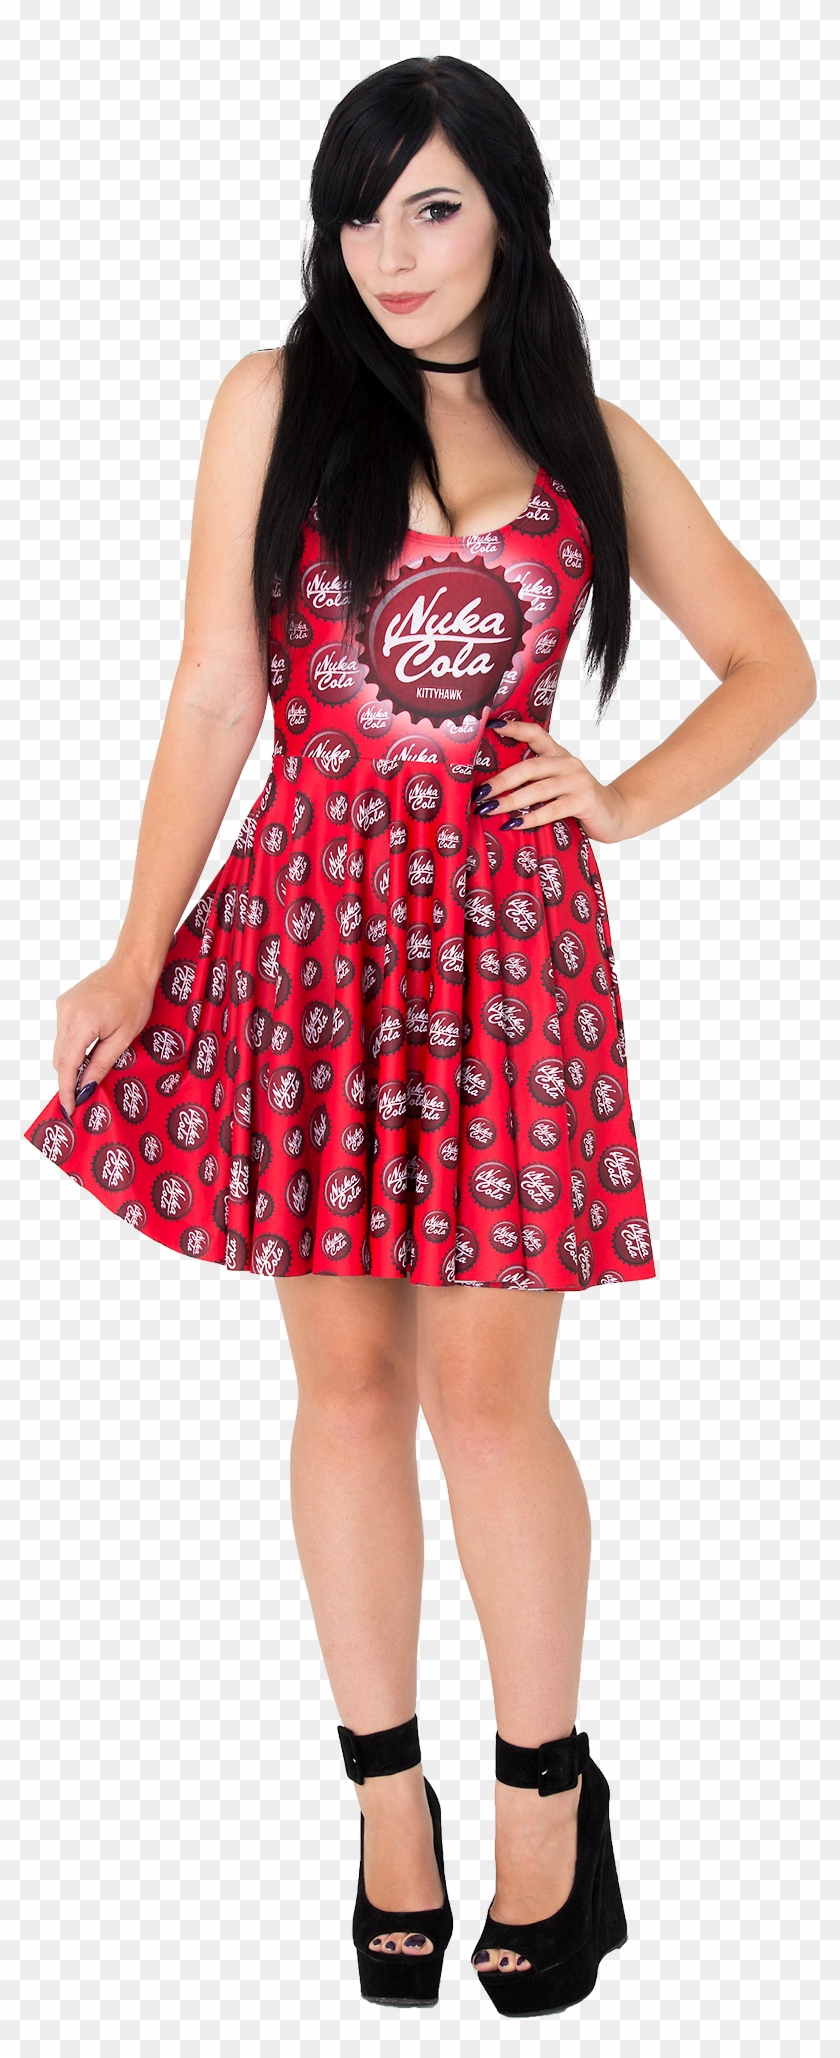 Kittyhawk Clothing Nuka Cola Skater Dress $75 Aud - Nuka Cola Dress Clipart #2461274